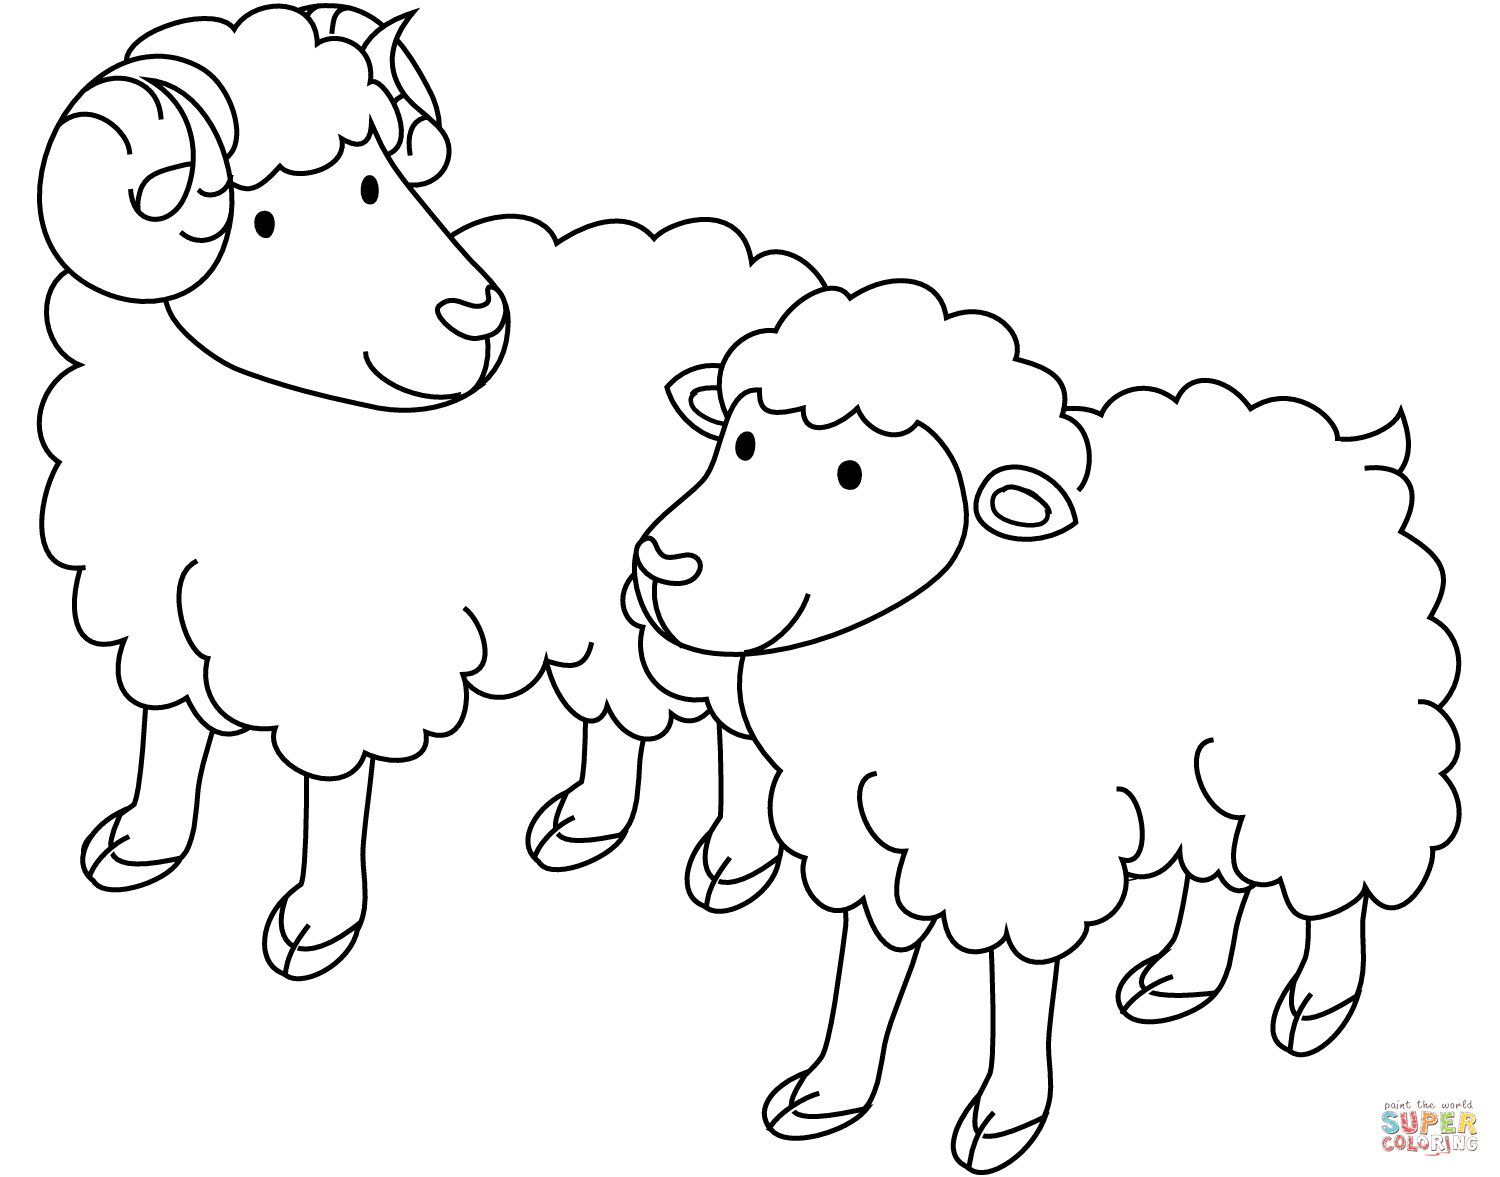 Sheep Face Coloring Page Sheep Ram And Ewe Coloring Page Free Printable Coloring Pages